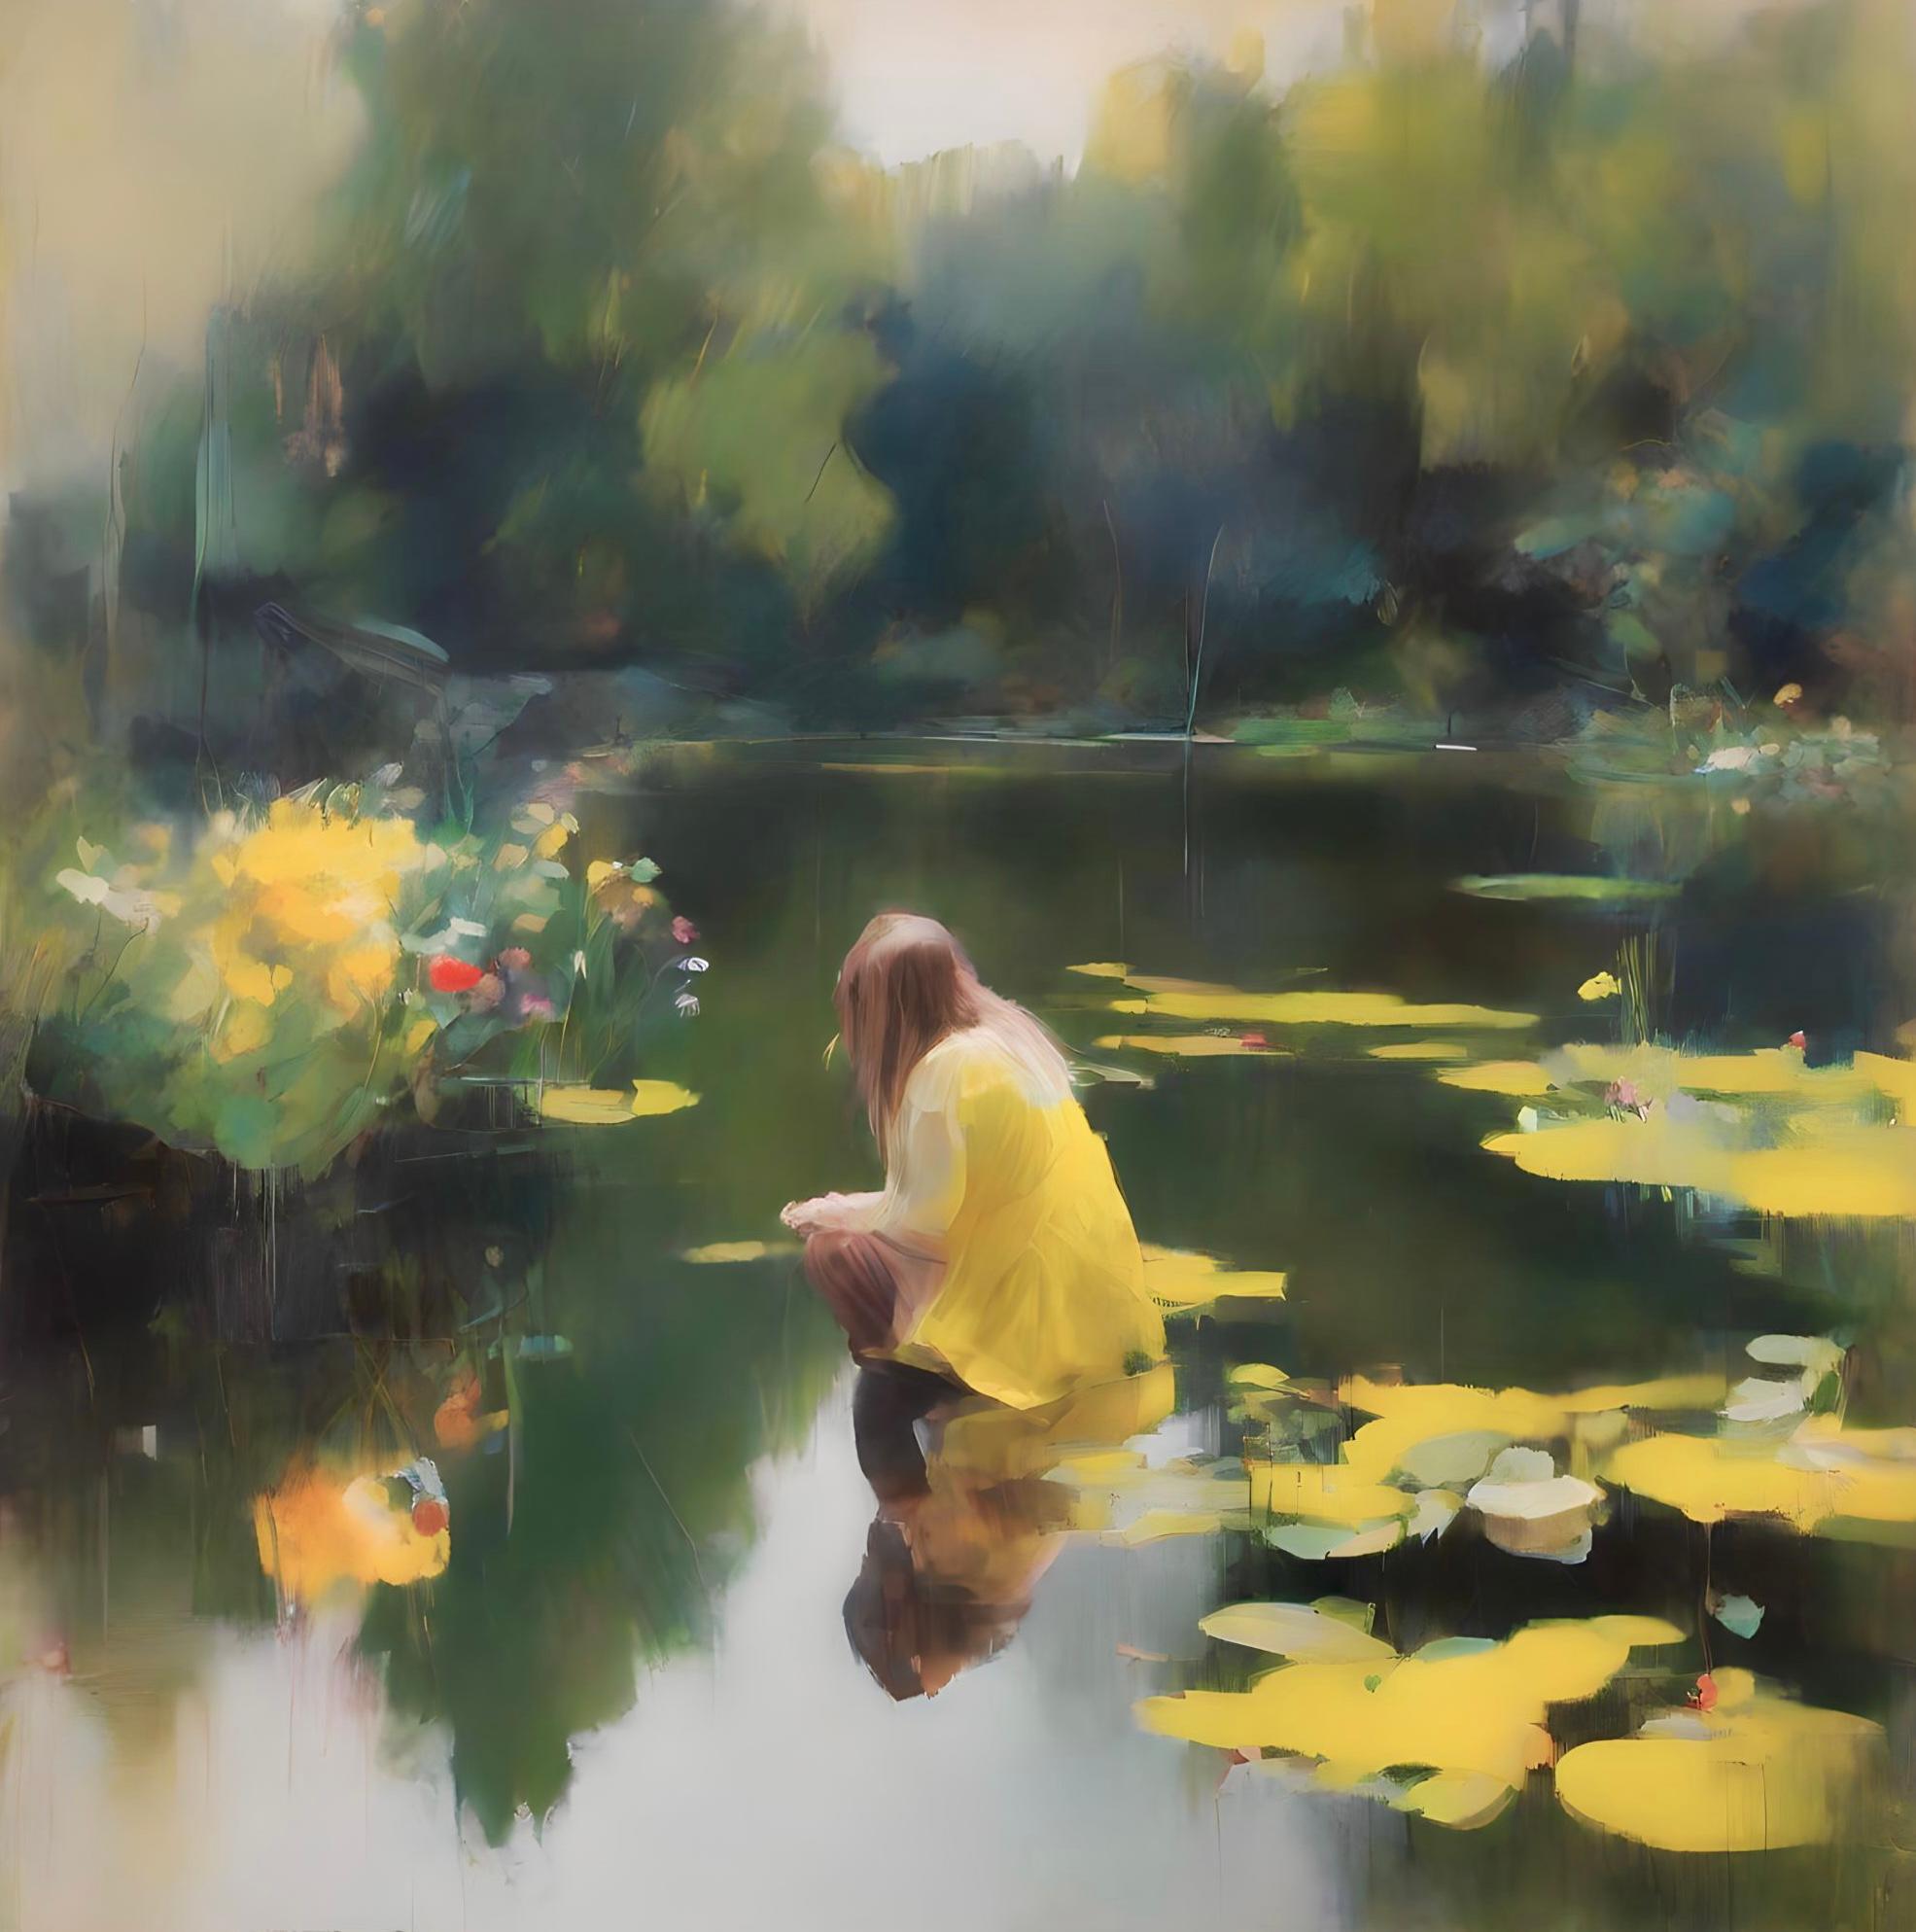 Pond, 70x70cm, print on canvas